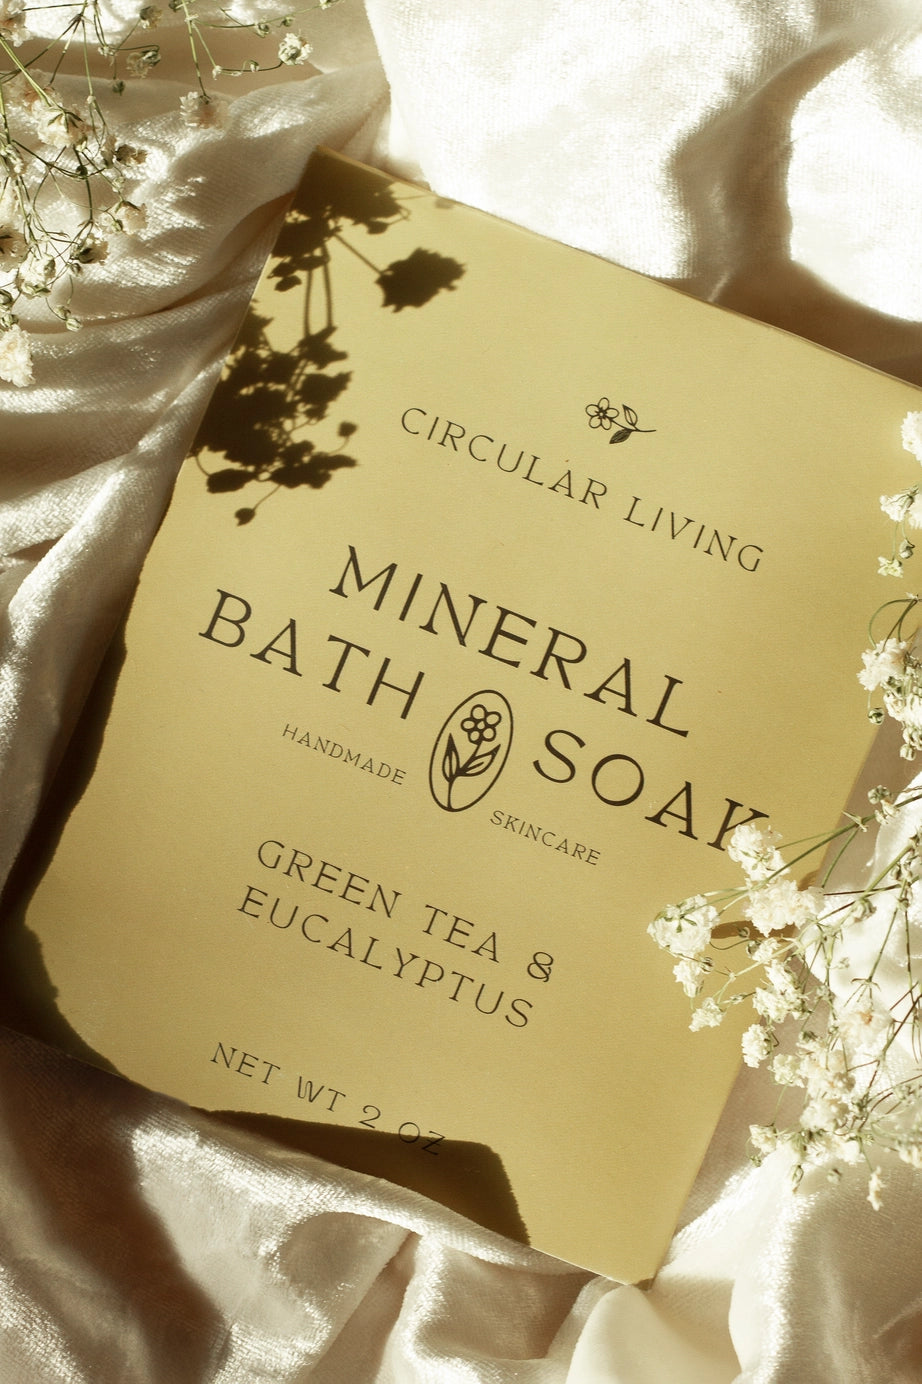 Mineral Bath Soak Sachet | Green Tea & Eucalyptus